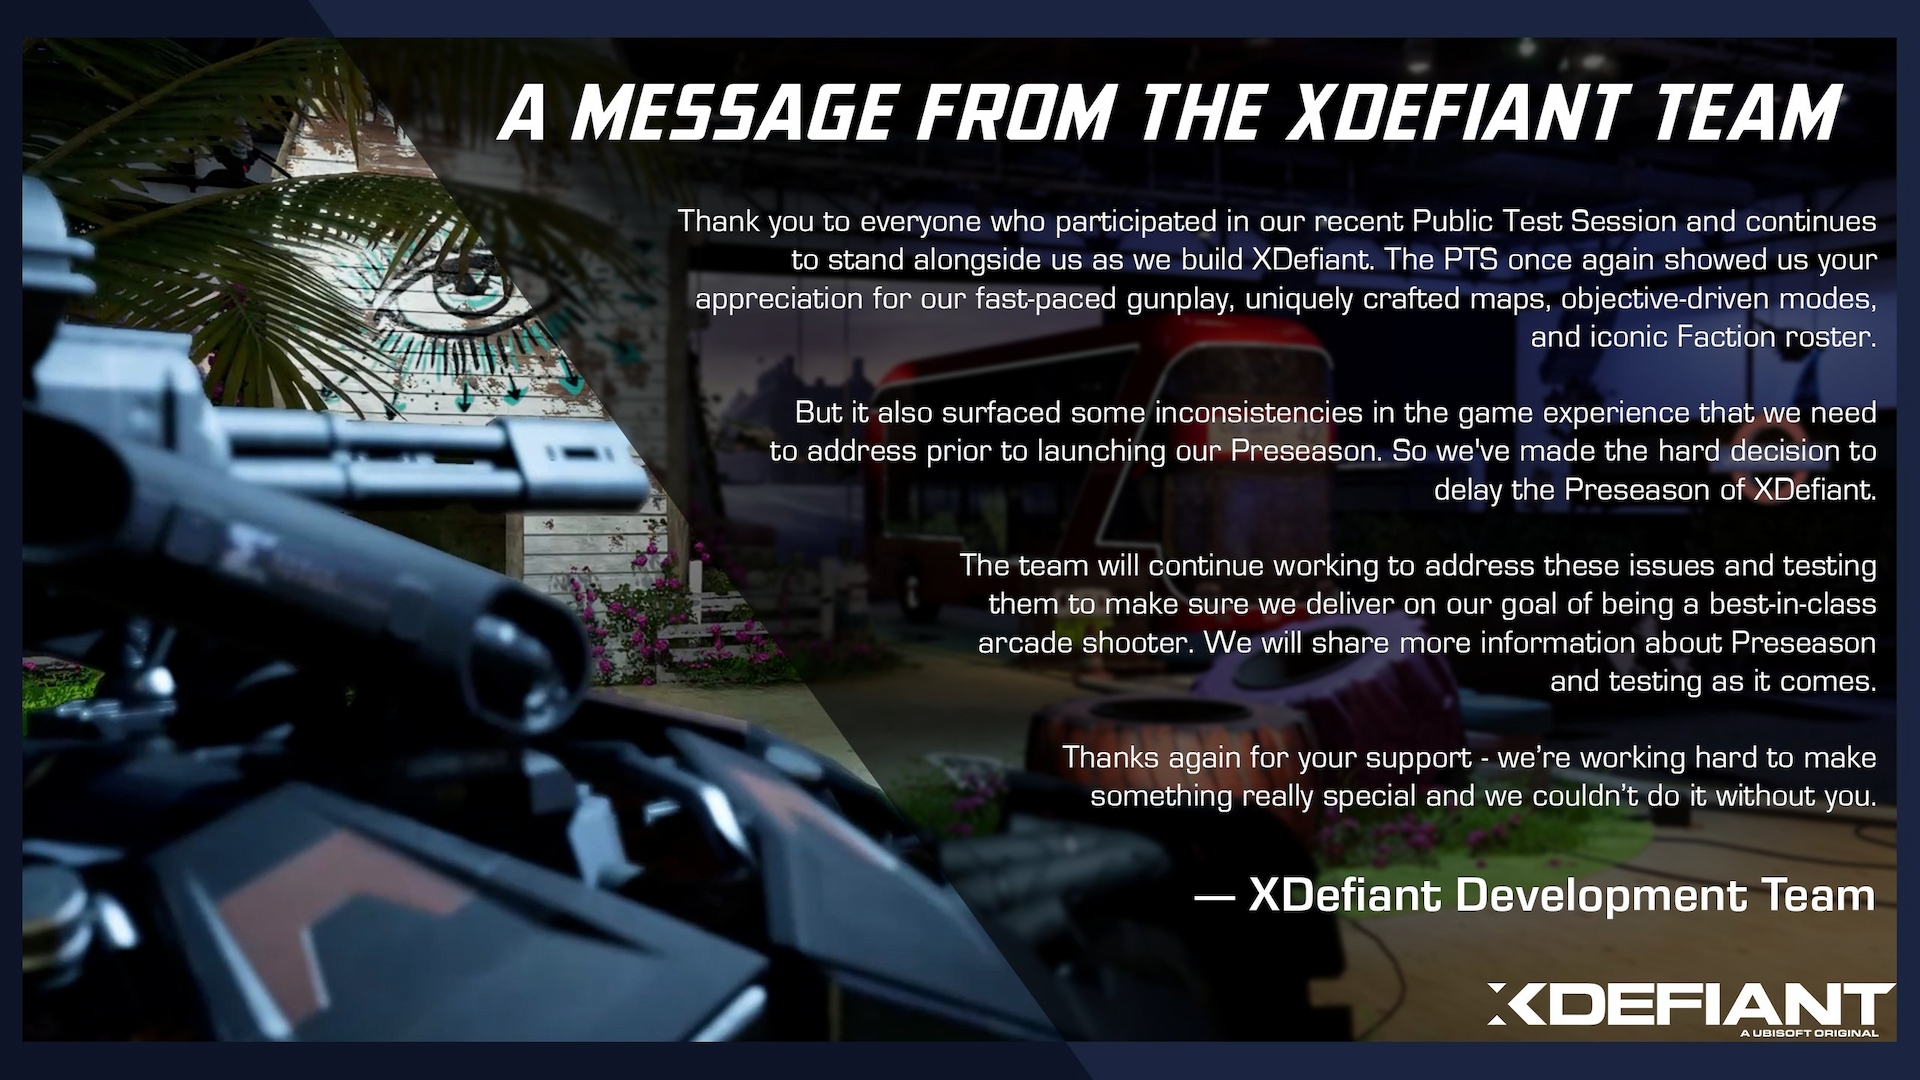 Ubisoft's post declaring the XDefiant release delay